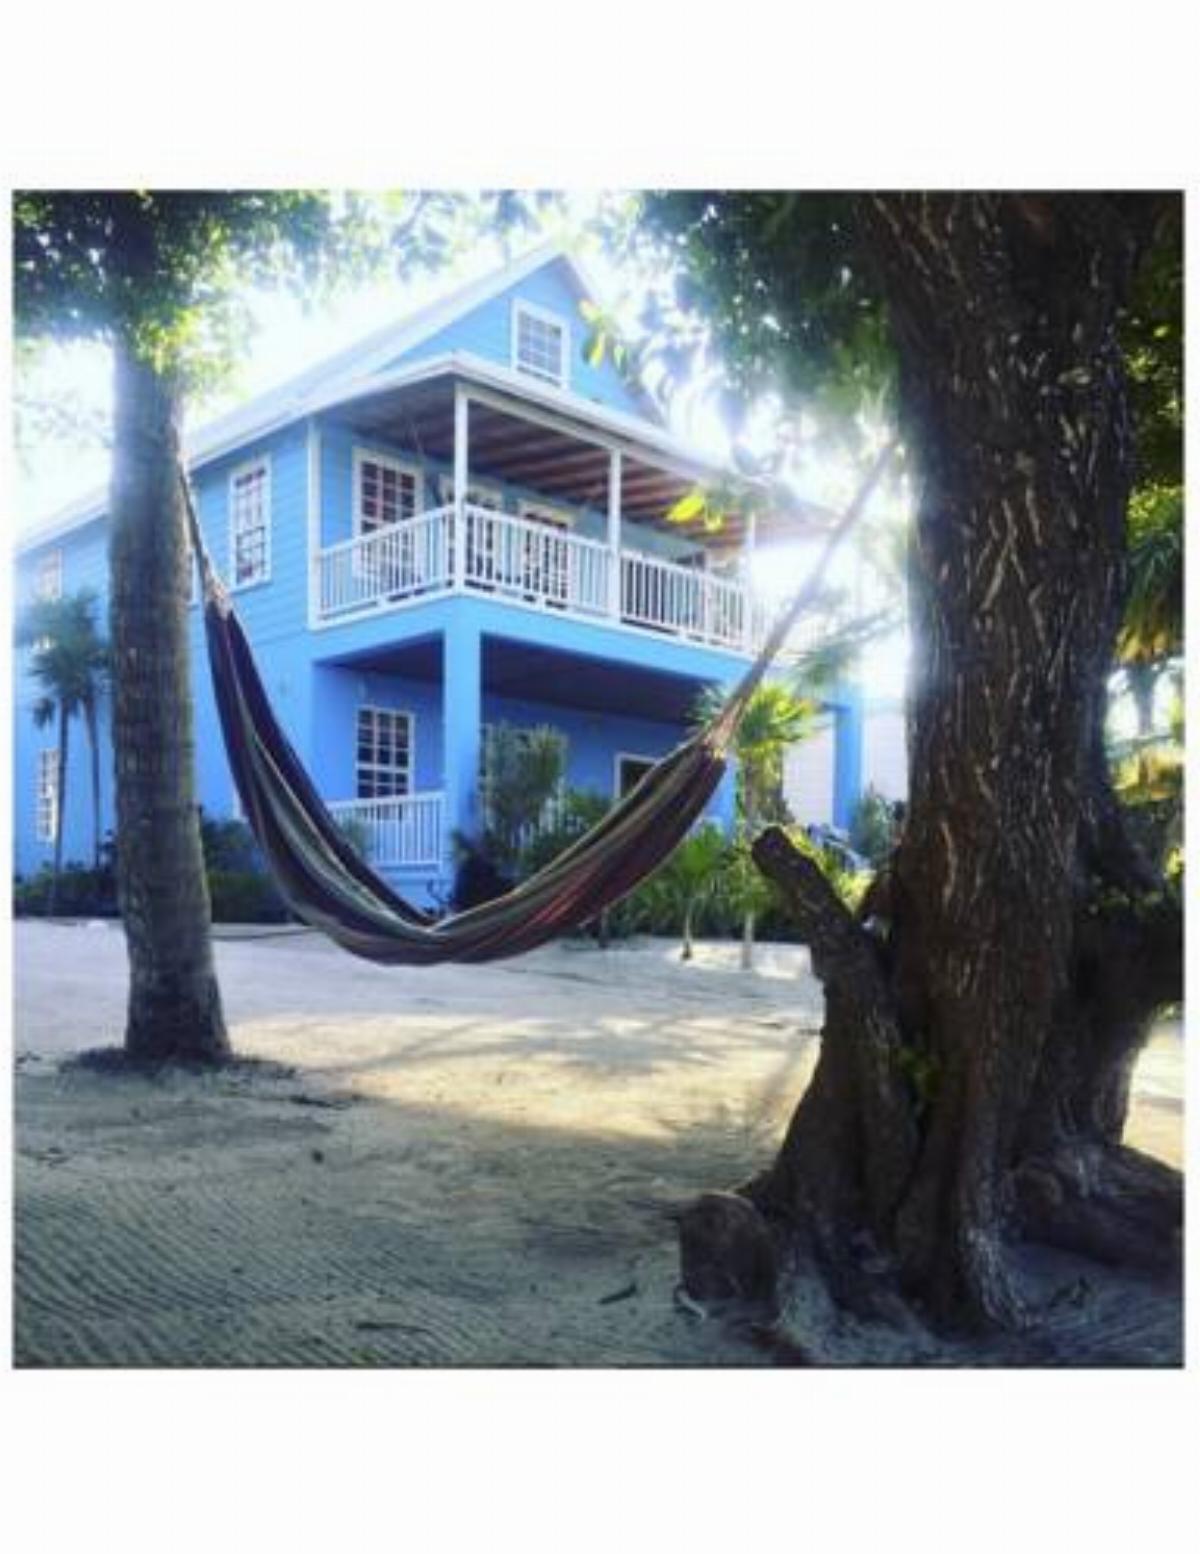 Belize1:Lauras Lookout Hotel Caye Caulker Belize